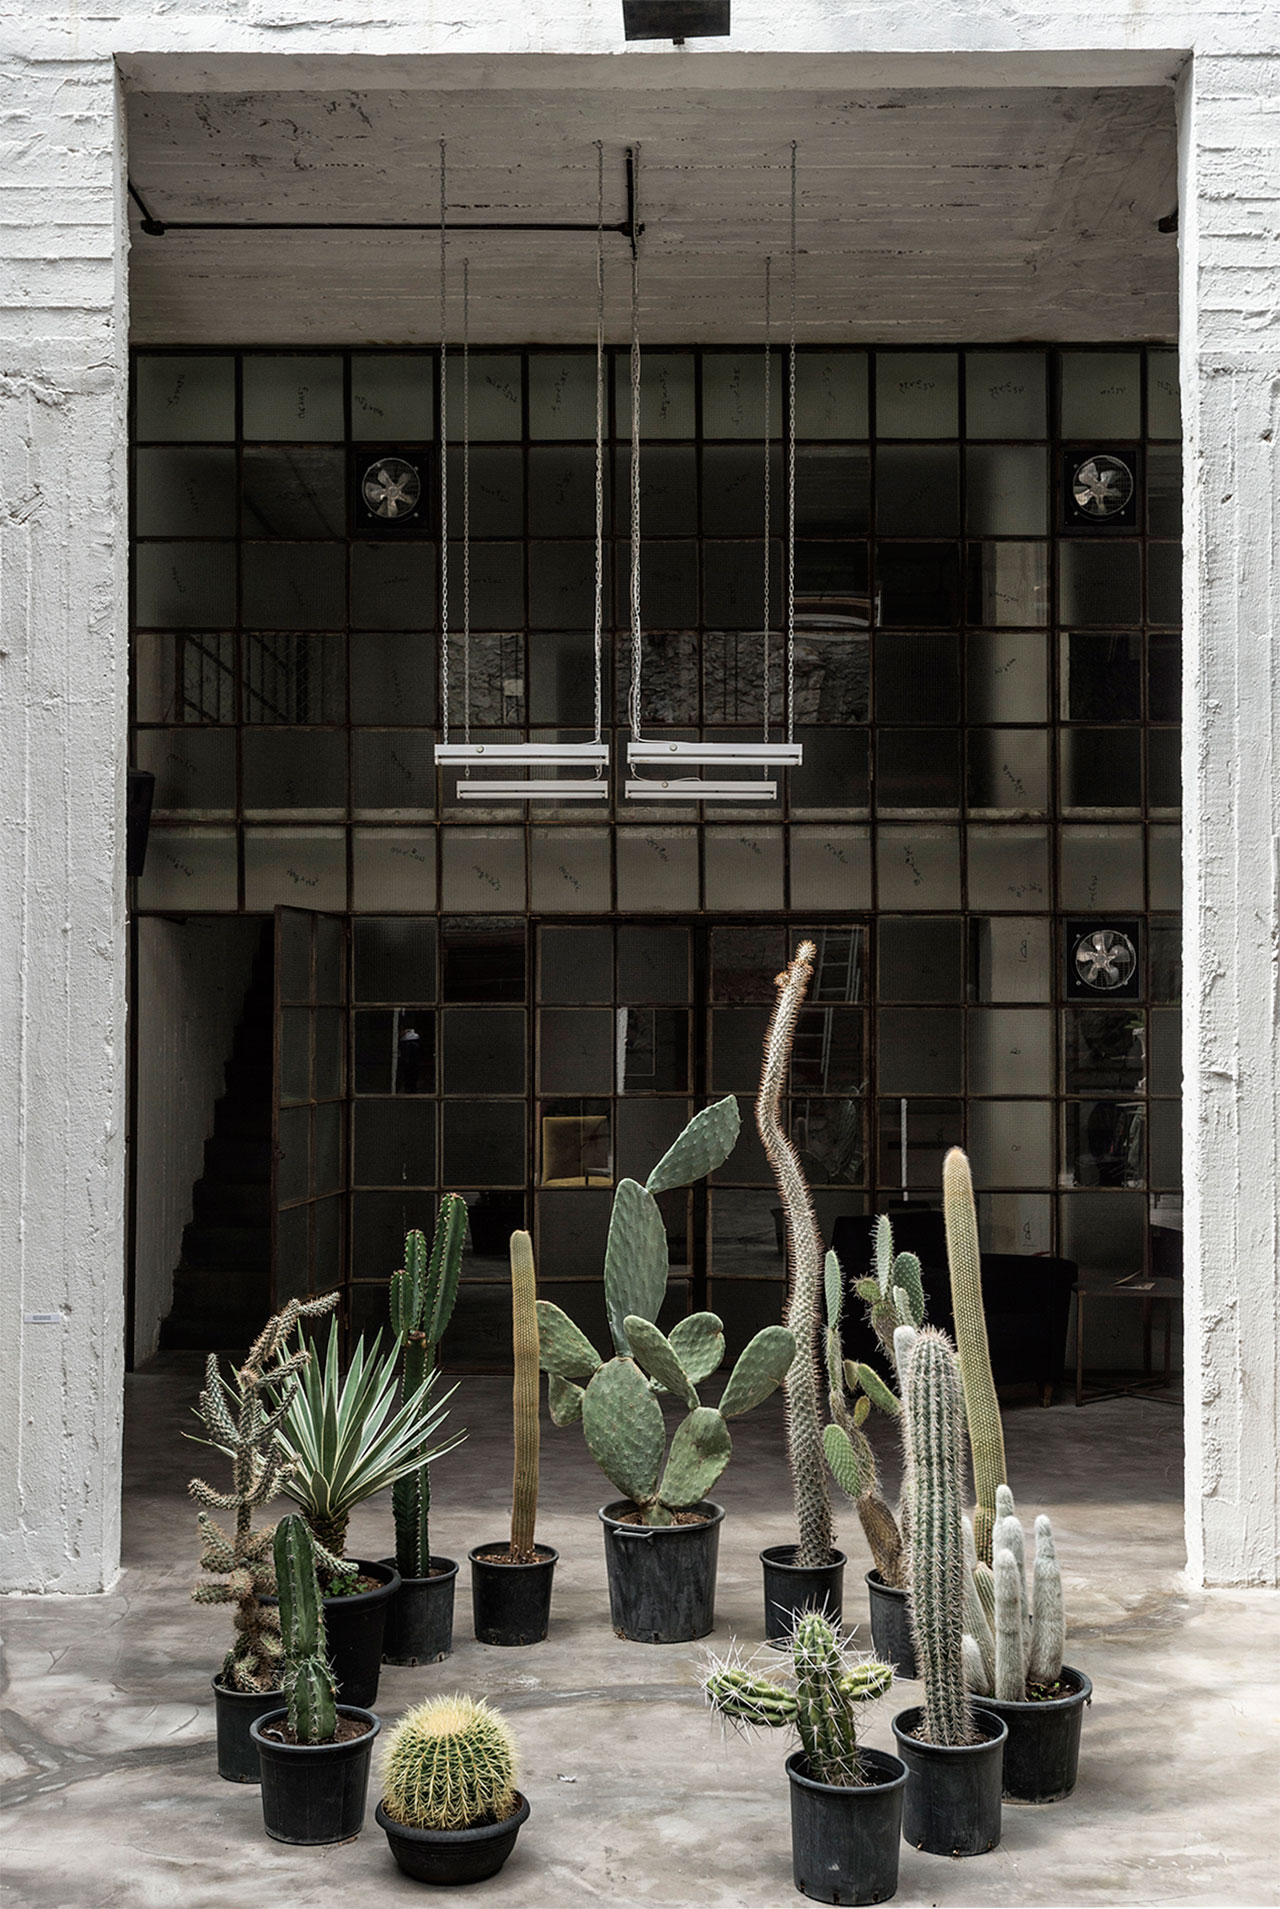 Thalia Raftopoulou, The Dance Floor III, 2016, installation with cactus.
Pirée, Piraeus, Greece. Styling by Costas Voyatzis, photo by Kosmas Koumianos for Yatzer.com, © Pirée, 2016.